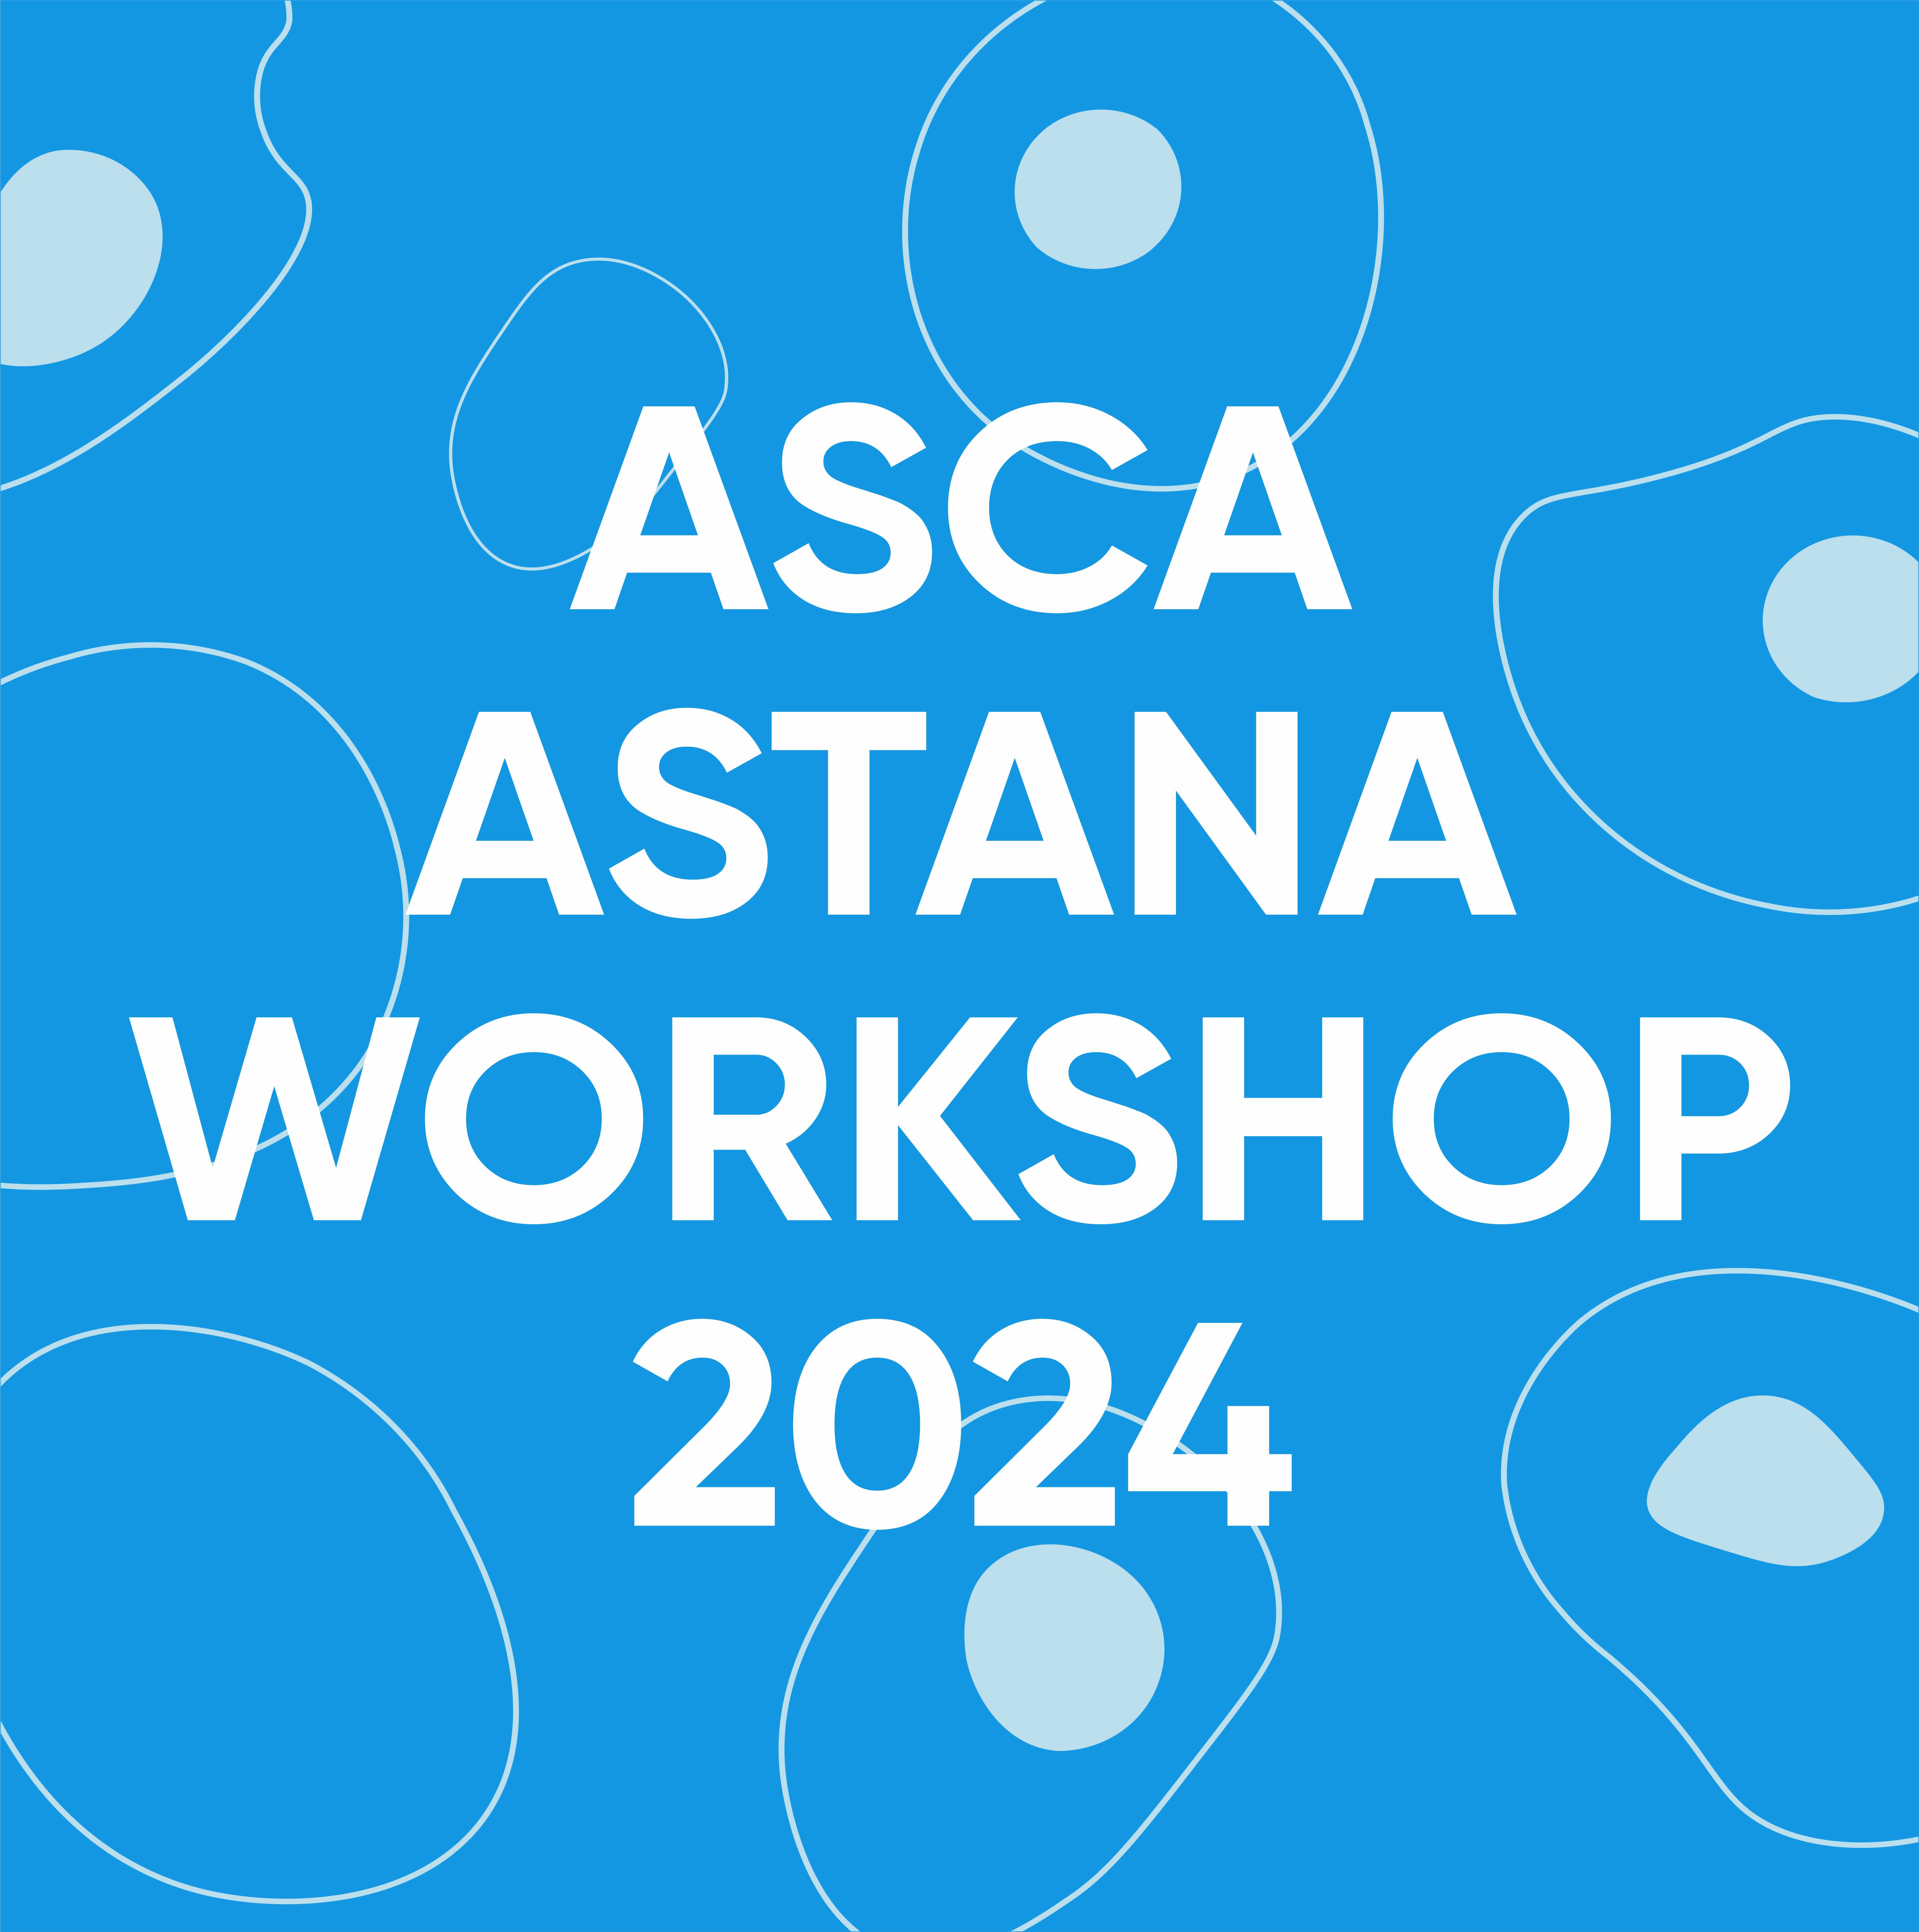 ASCA Astana Workshop 2024